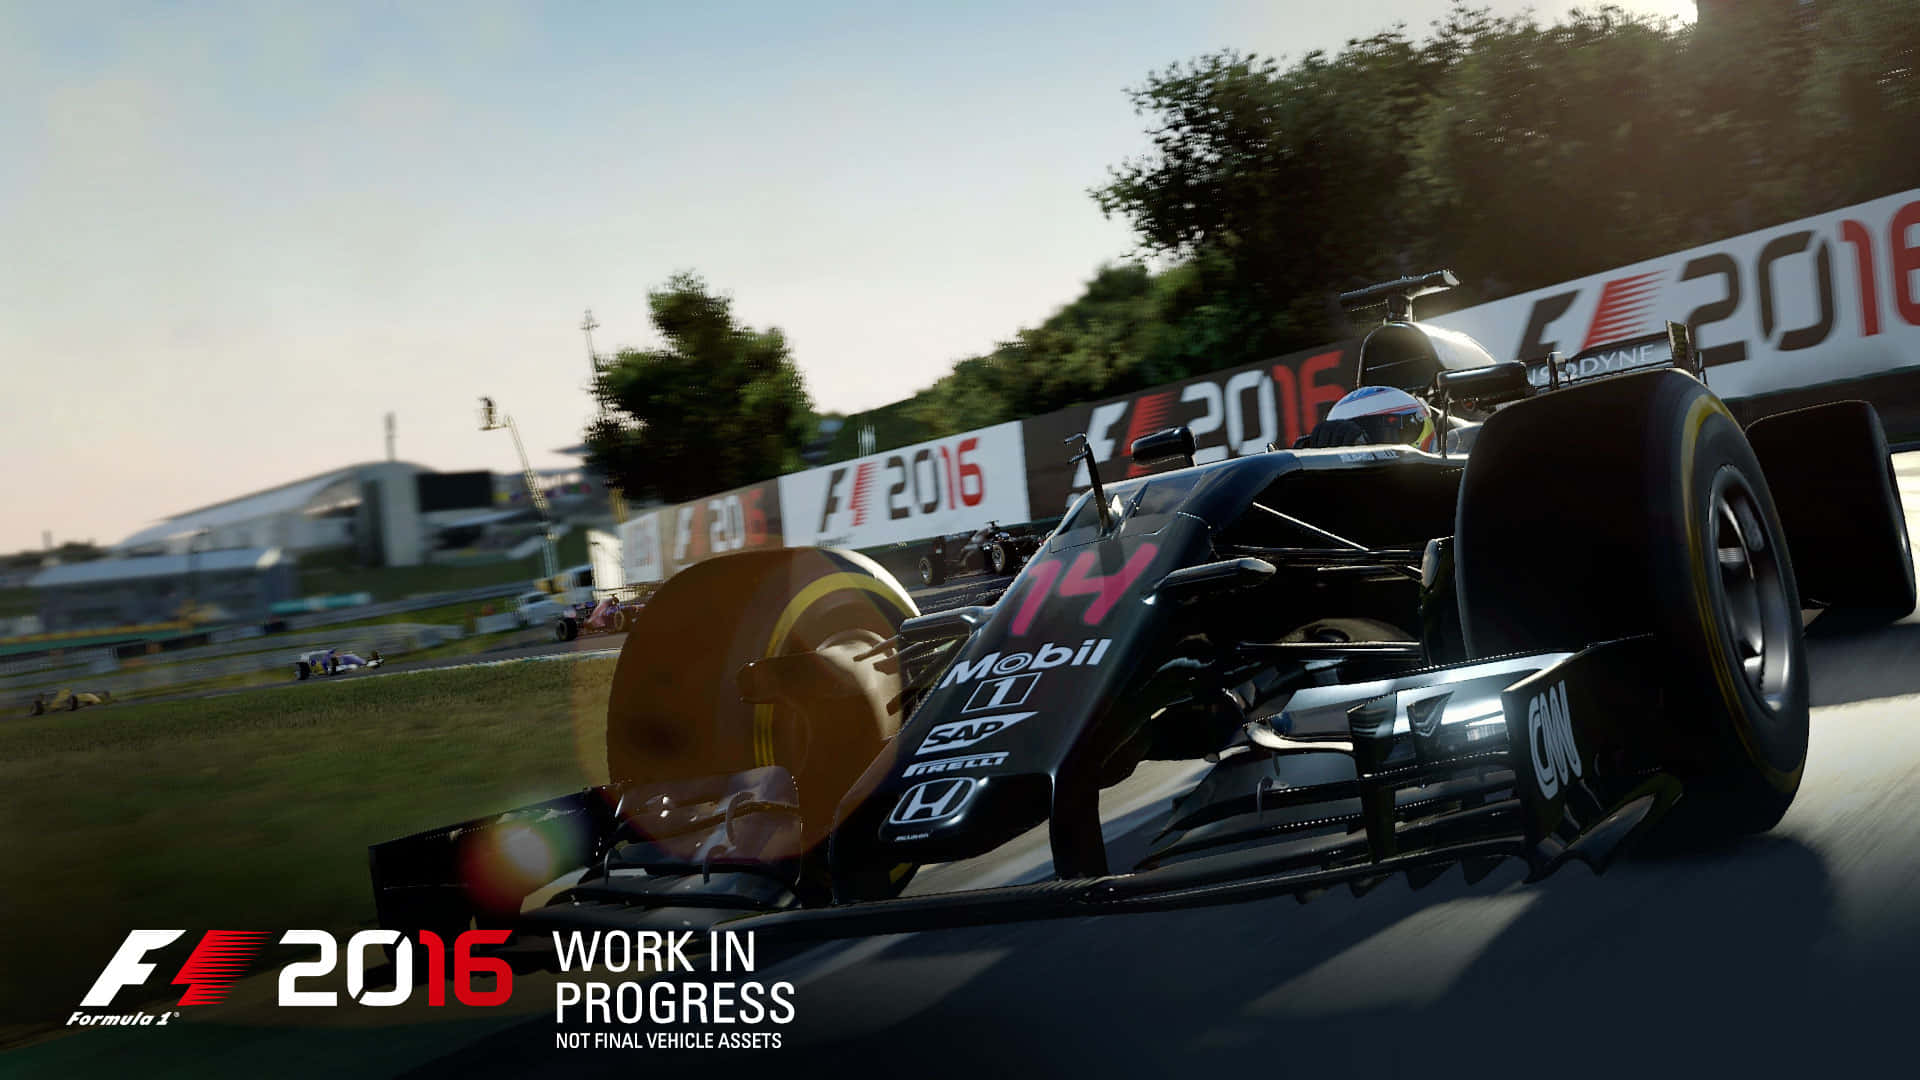 F1 2015 World In Progress Screenshot